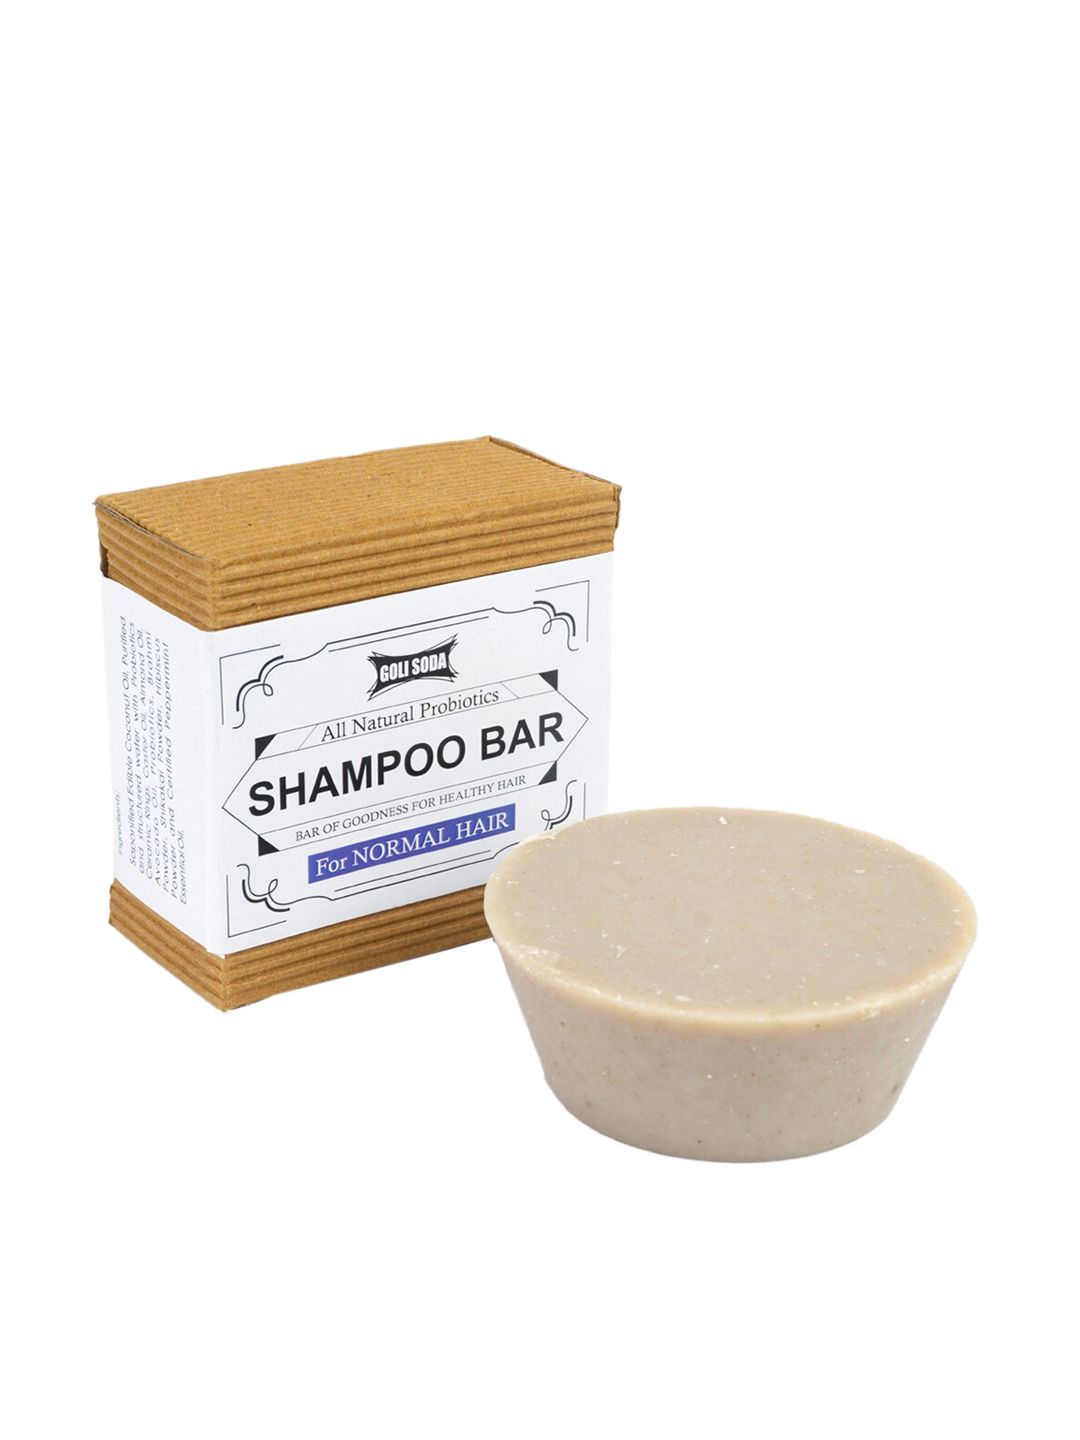 GOLI SODA All Natural Probiotics Shampoo Bar for Normal Hair - 90 g Price in India